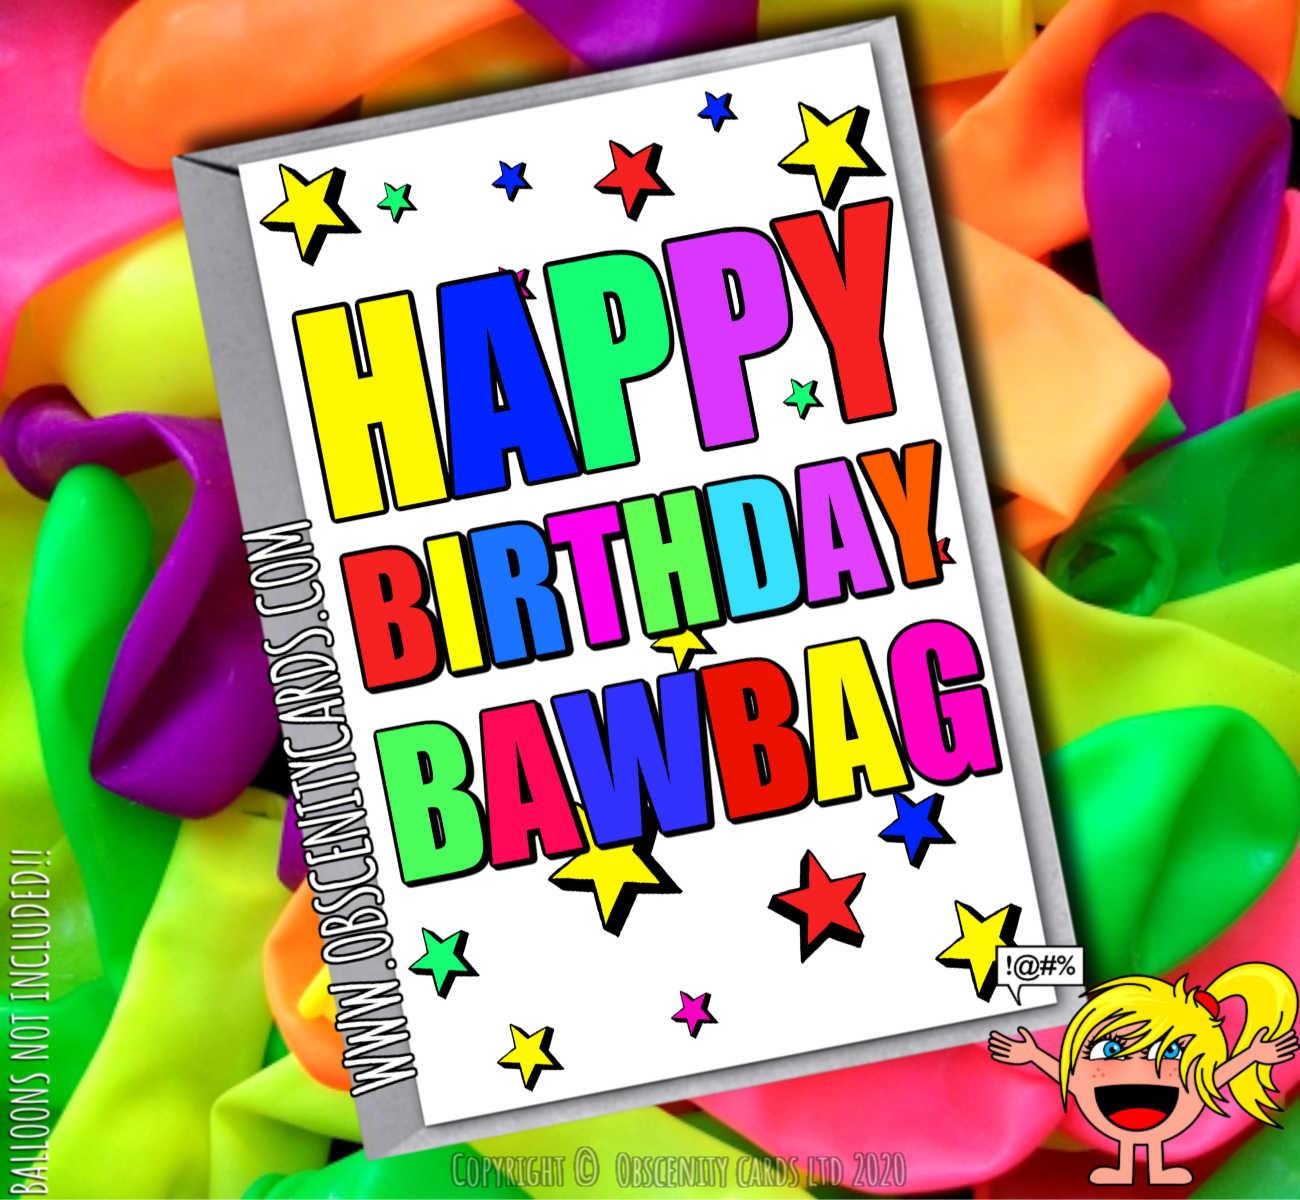 HAPPY BIRTHDAY BAWBAG FUNNY CARD